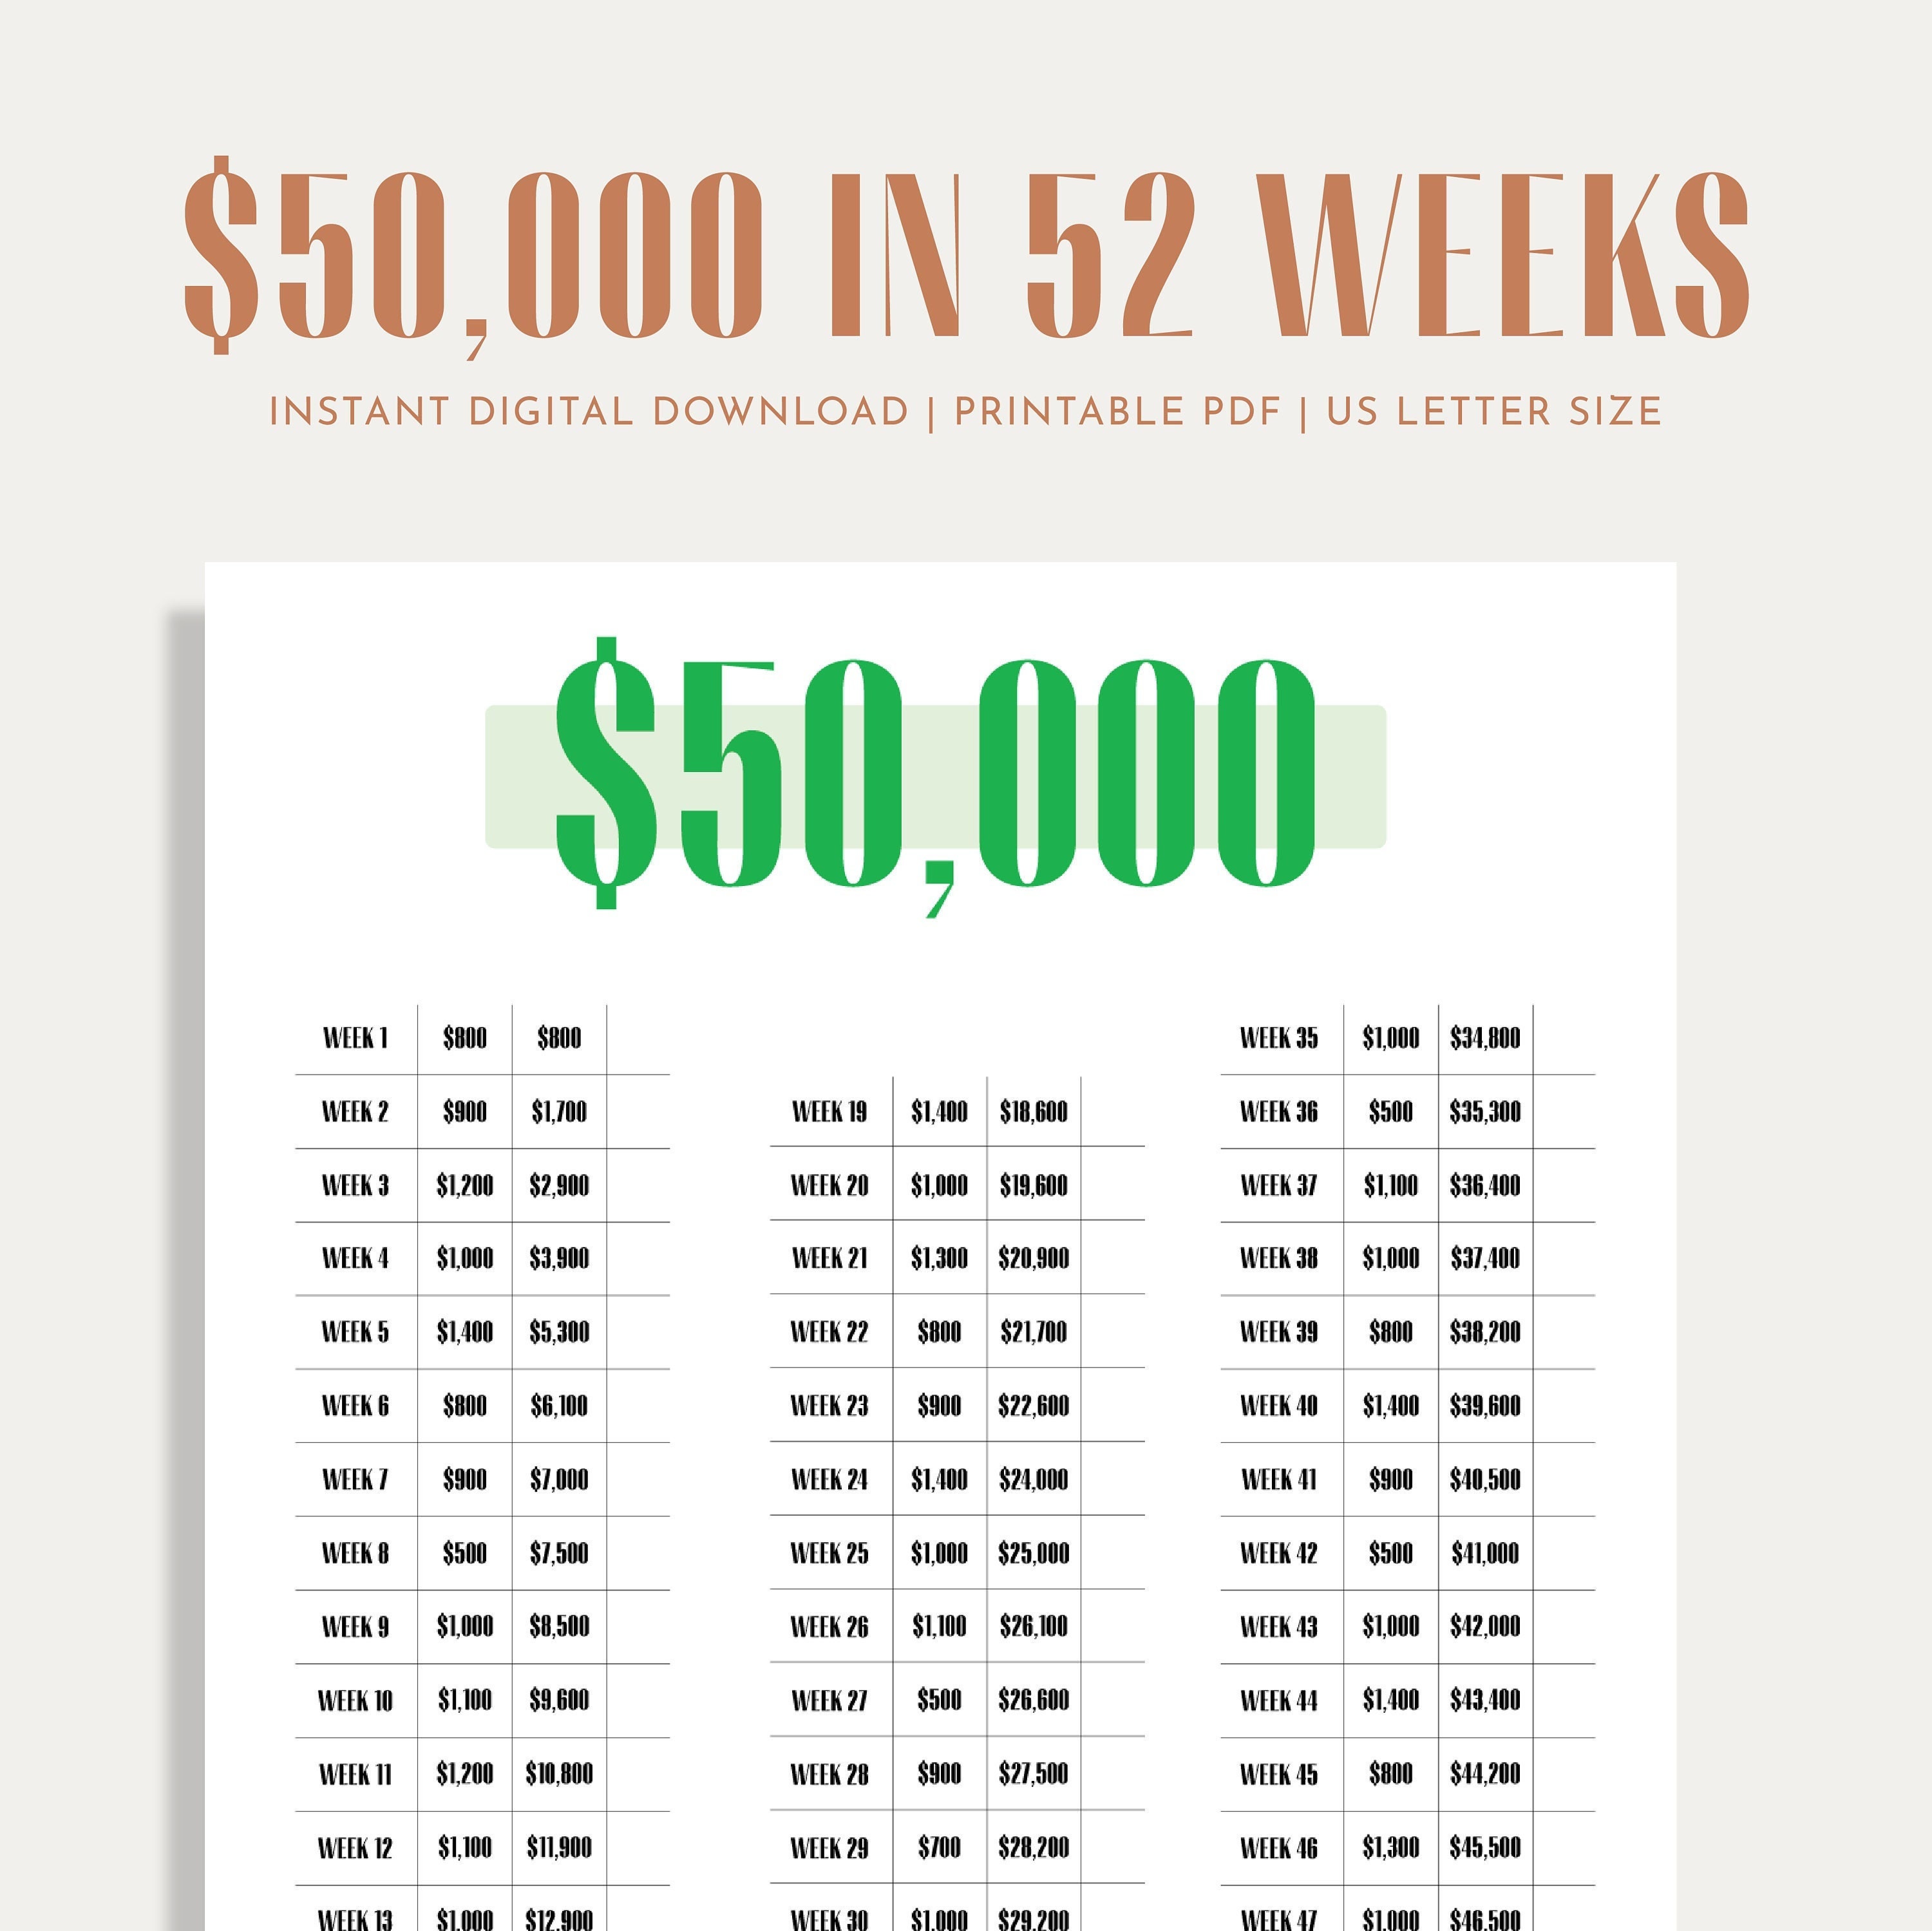 Save Money Challenge, 50k Savings Challenge, Monthly Budget